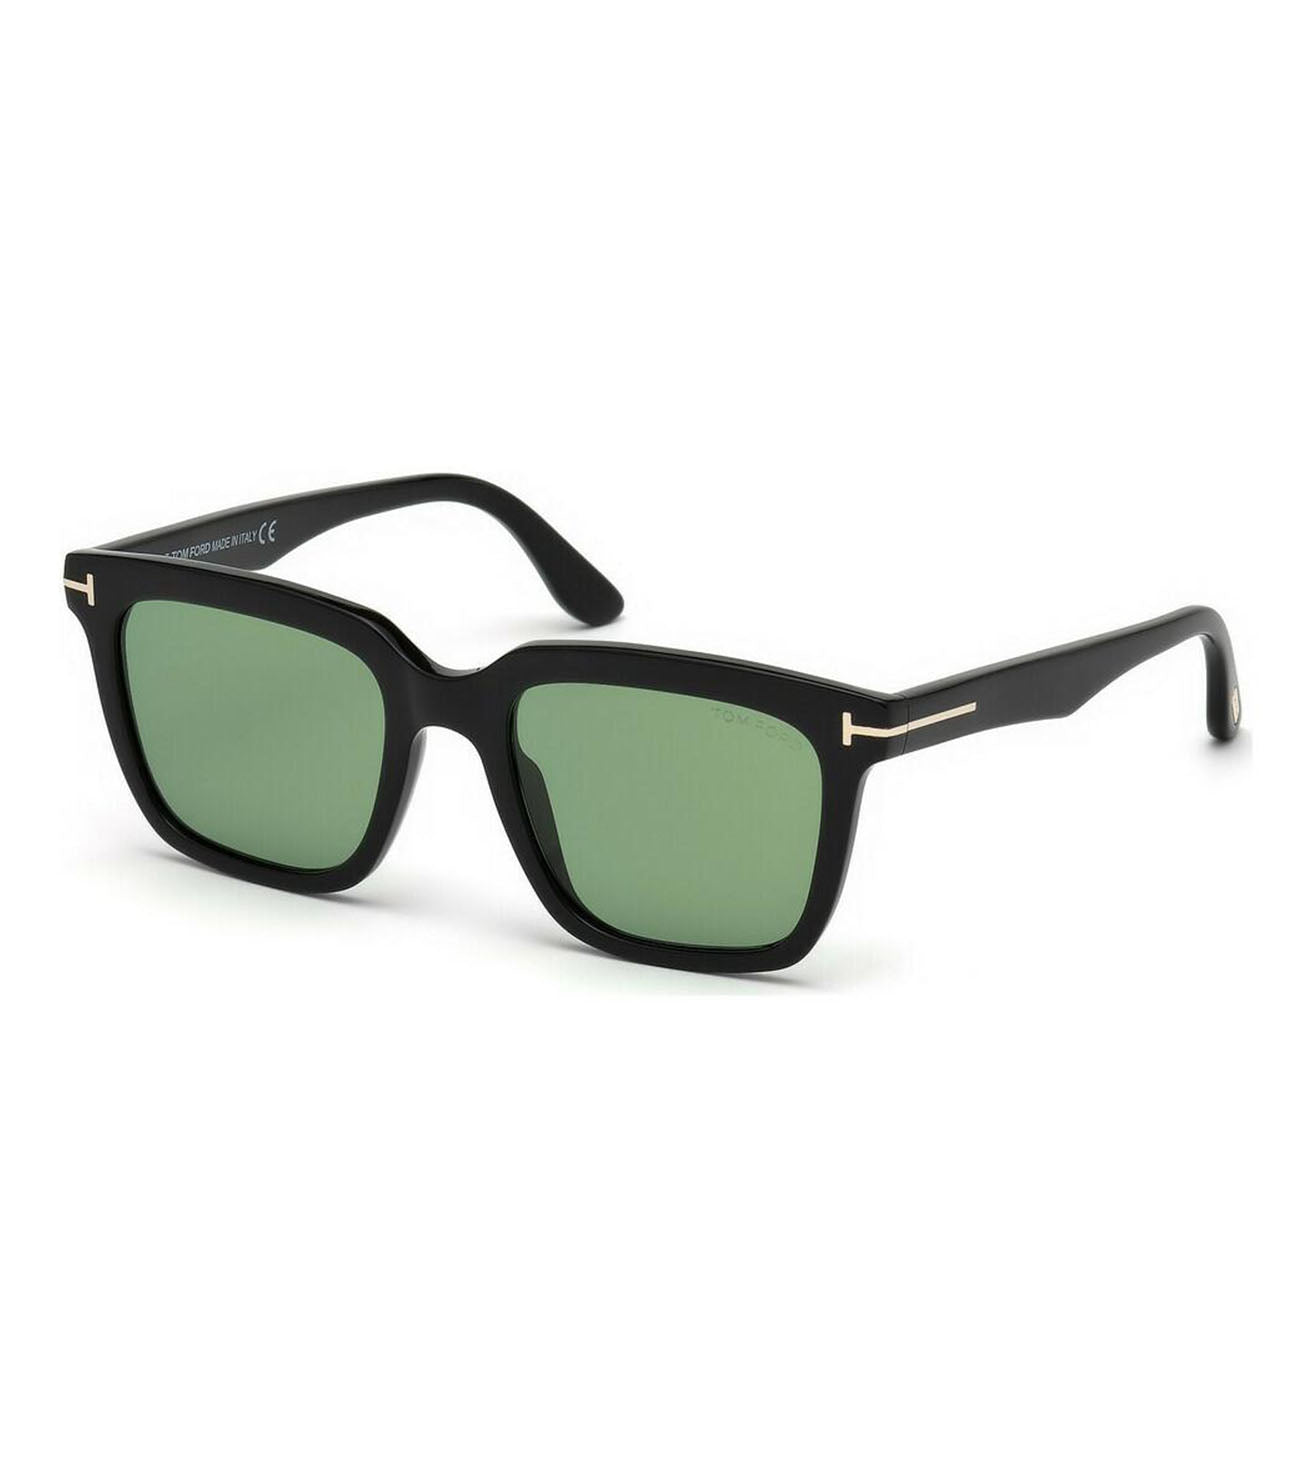 Tom Ford Men's Green Square Sunglasses